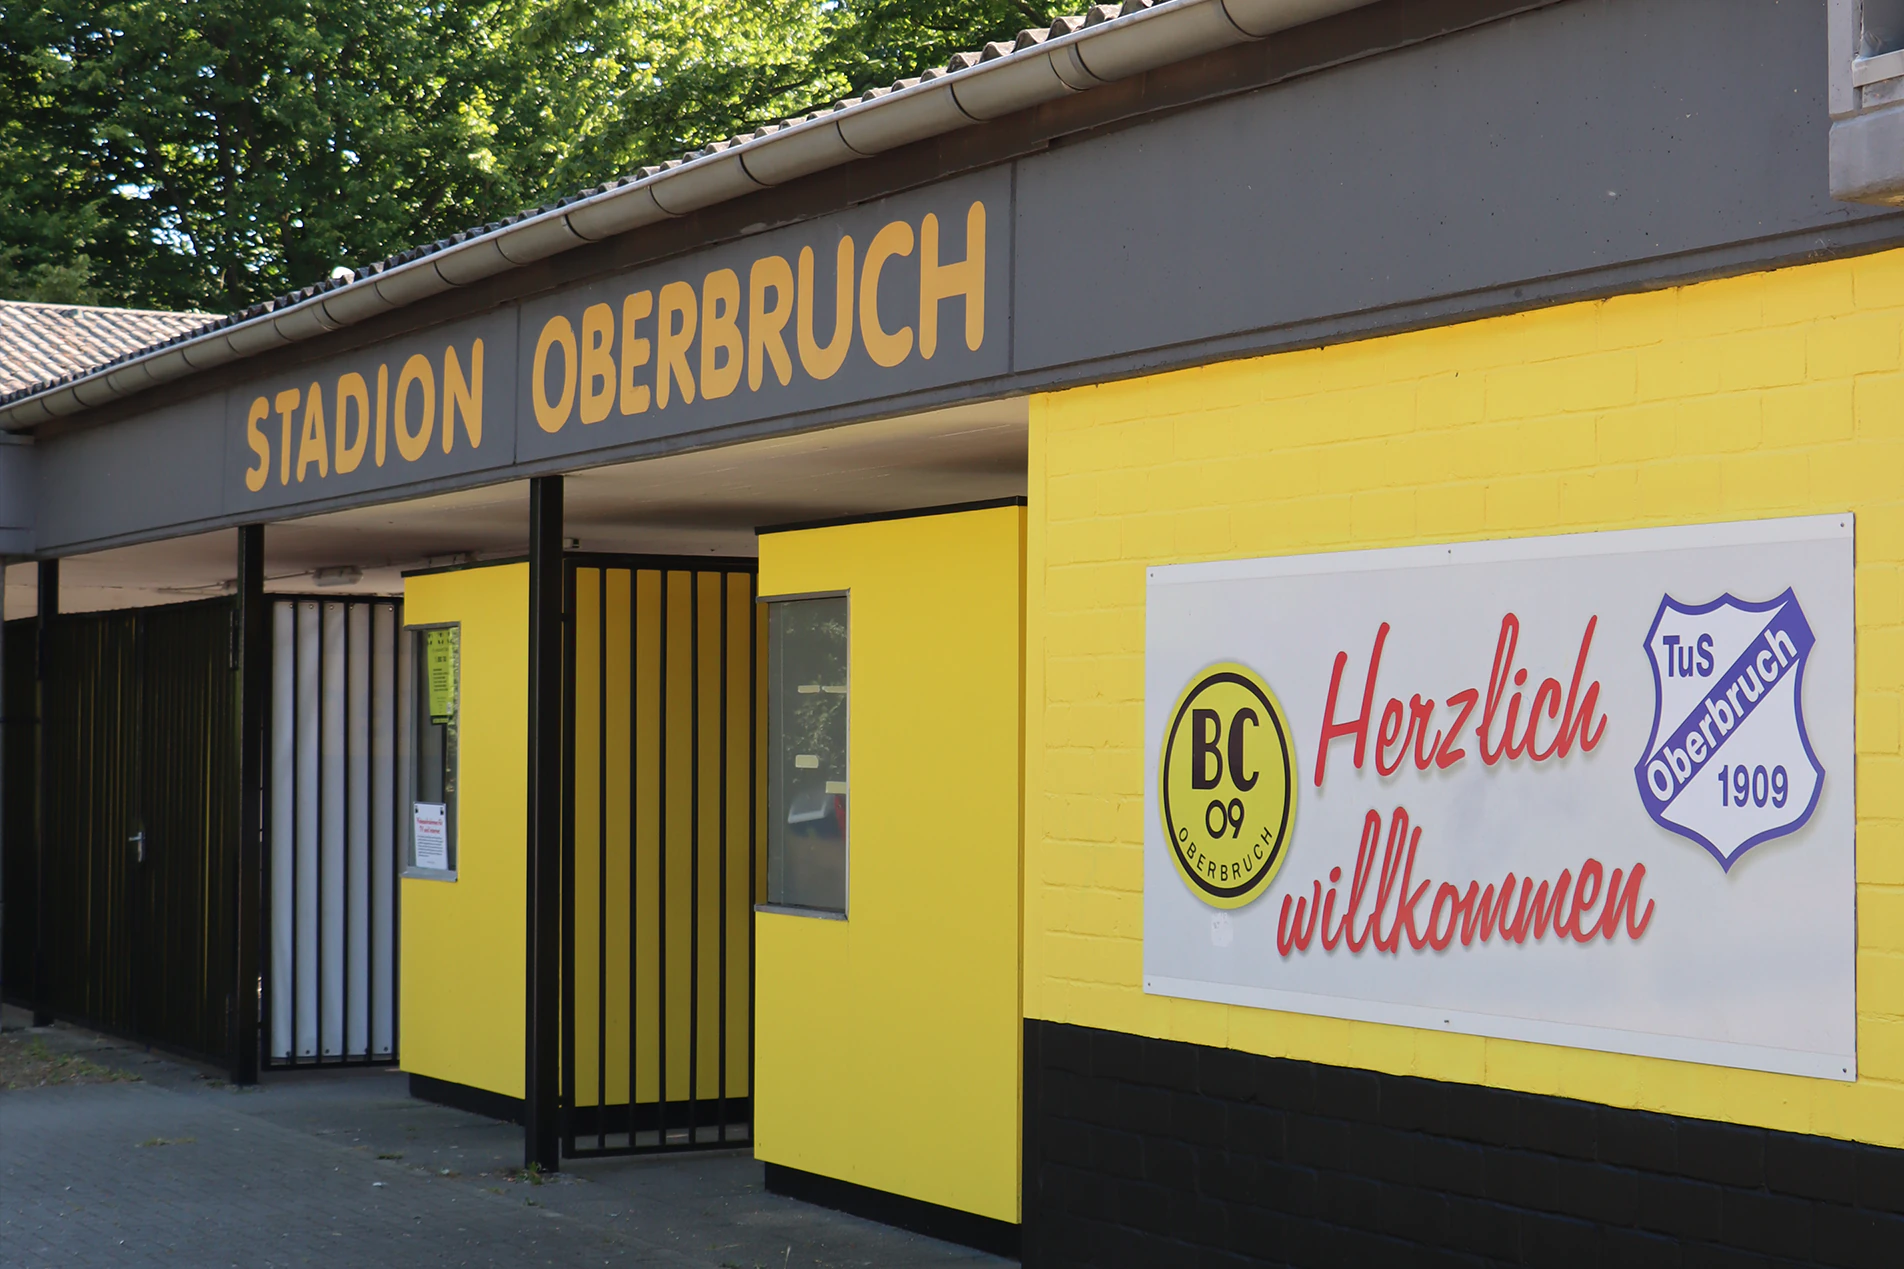 Stadion Eingang des Oberbrucher BC09 Heinsberg e.V. in Oberbruch